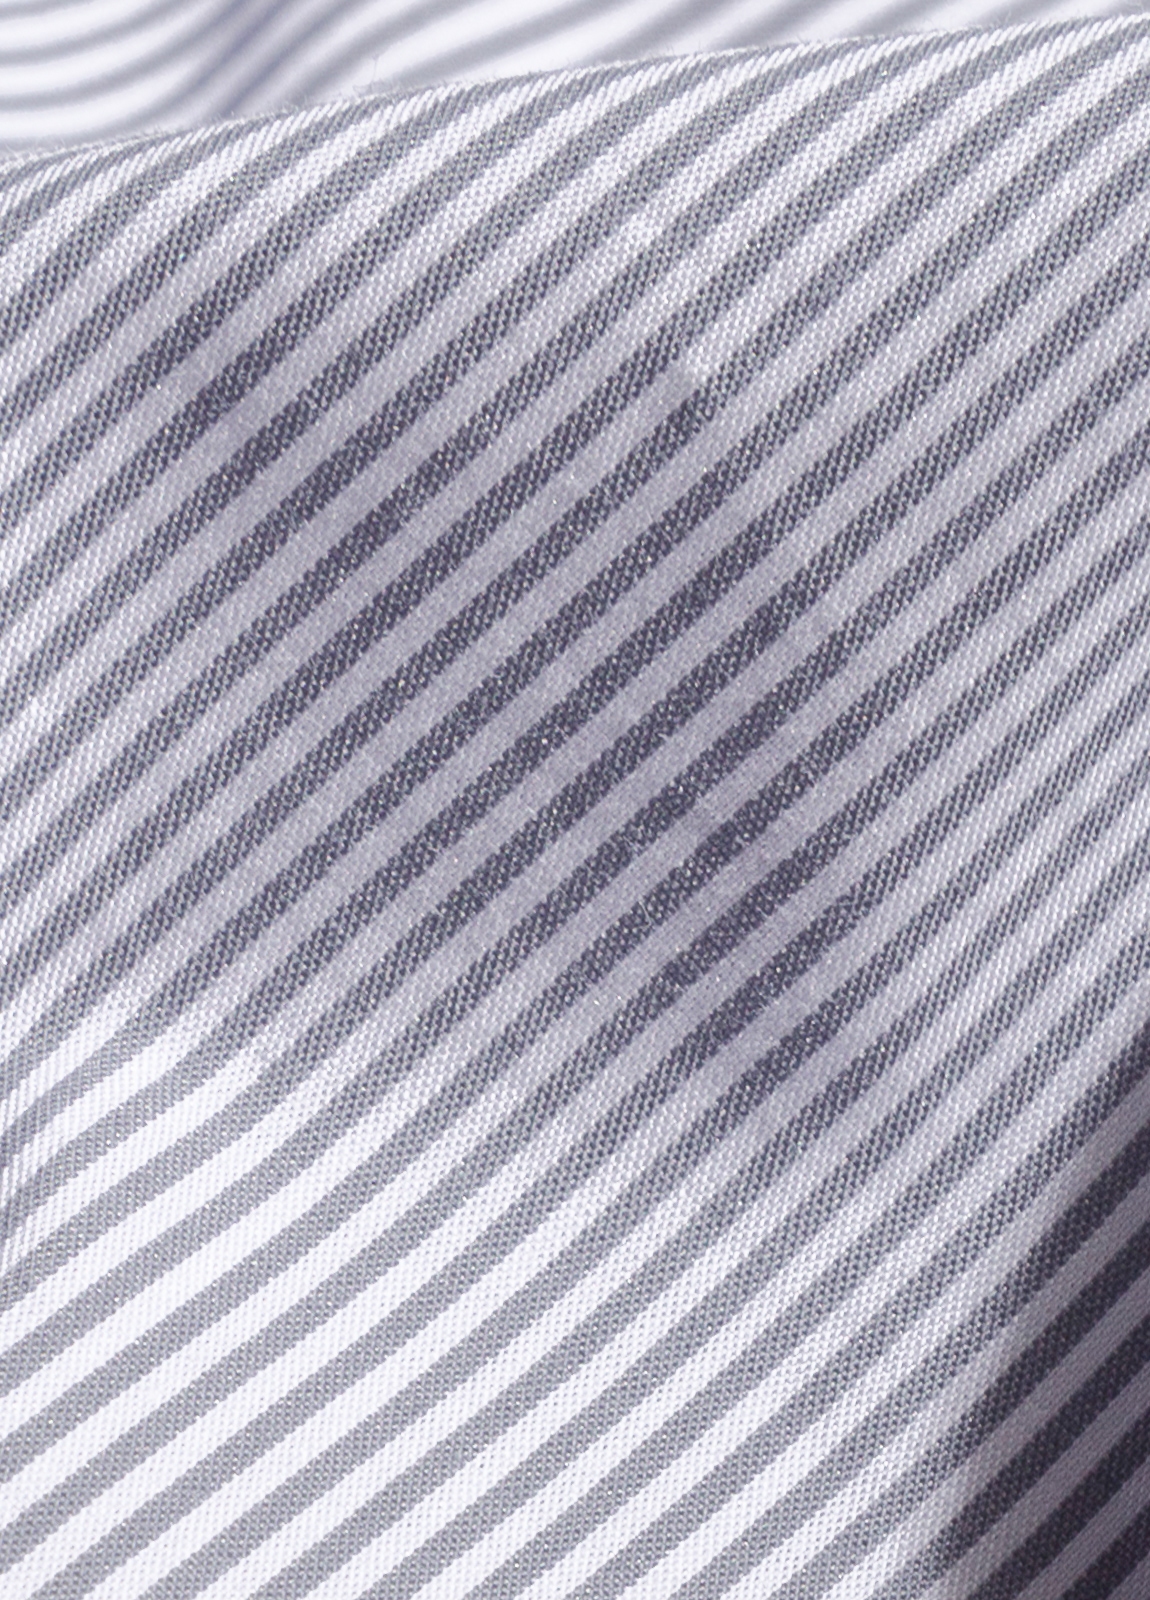 Camisa sport FUREST COLECCION mil rayas gris - Ítem3